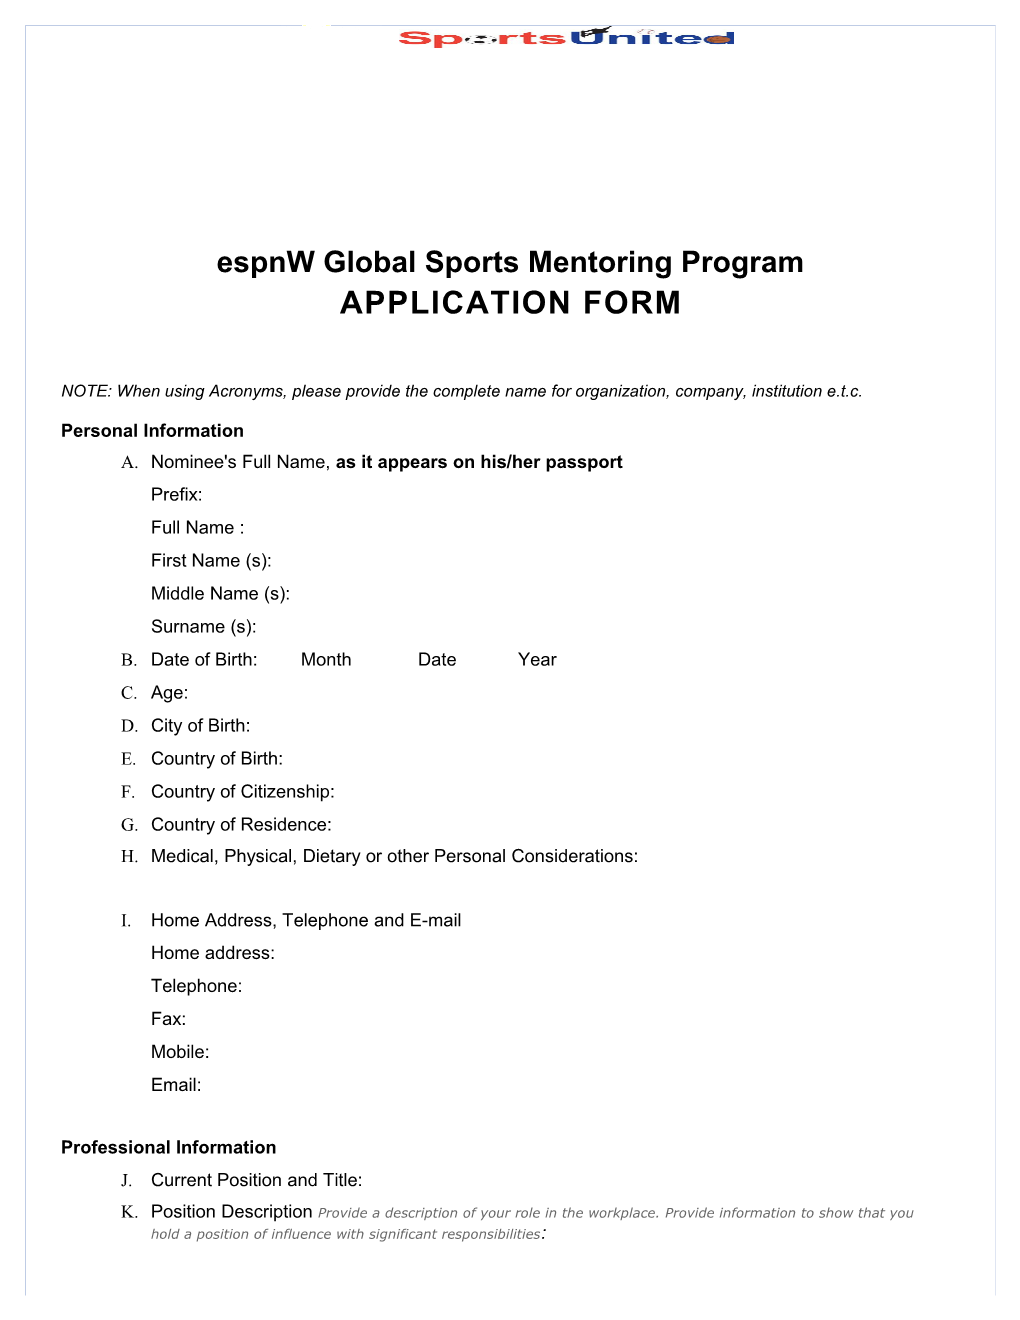 Espnwglobal Sports Mentoring Program APPLICATION FORM